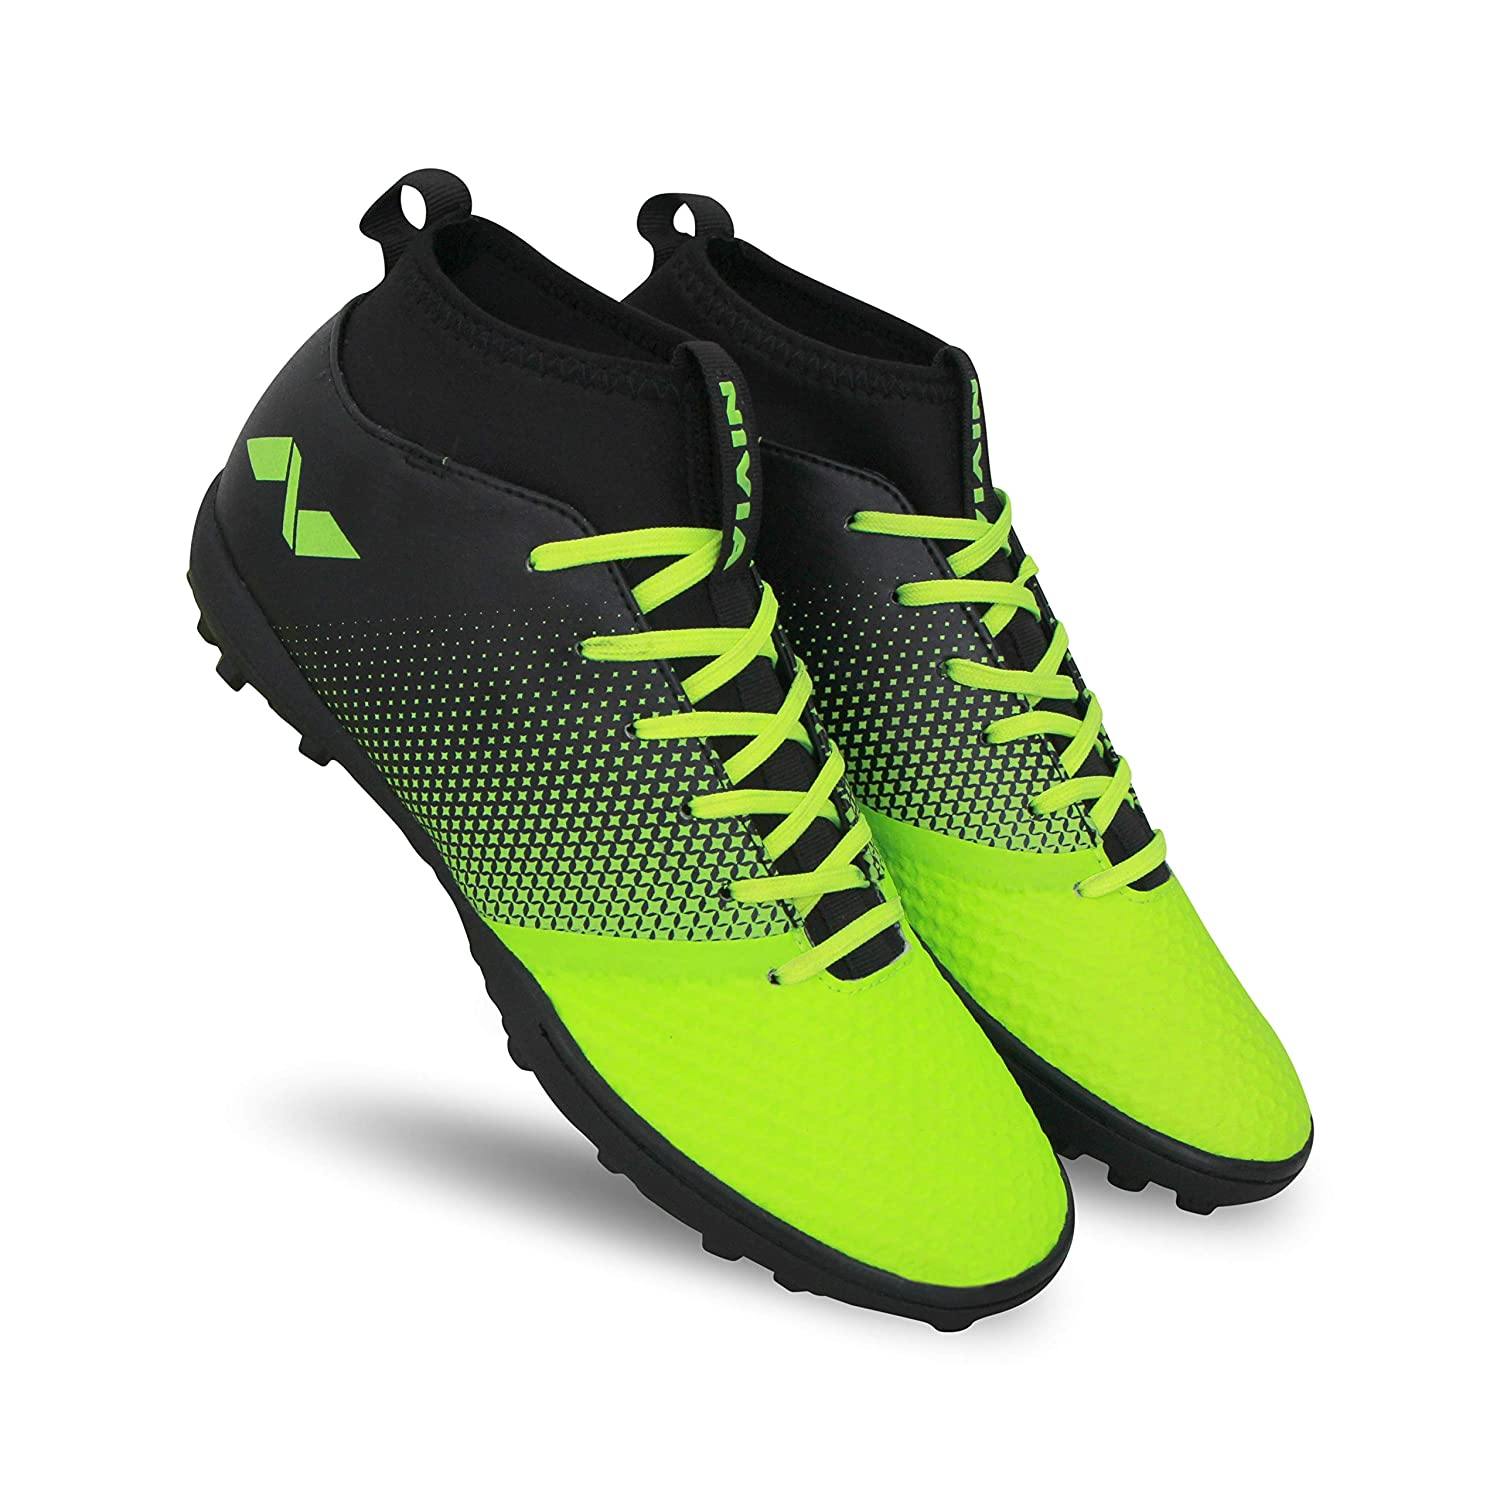 Nivia Ashtang Football Turf Shoes - Fluorescent Green/Black - Best Price online Prokicksports.com